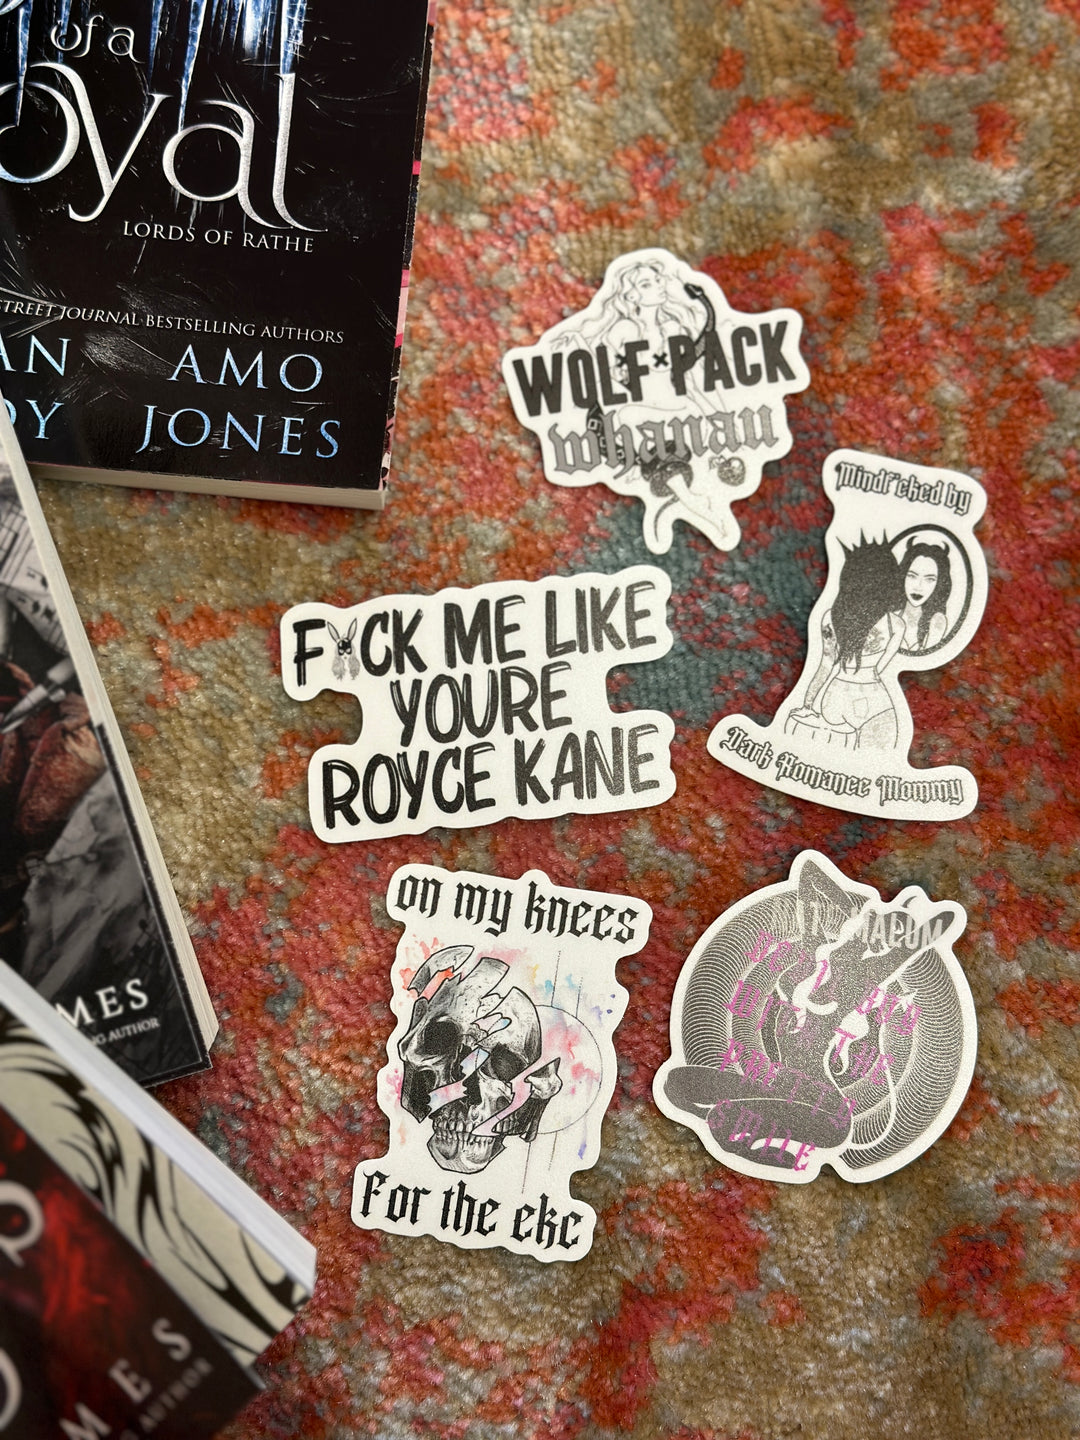 Amo Jones: The New Stuff Sticker Pack